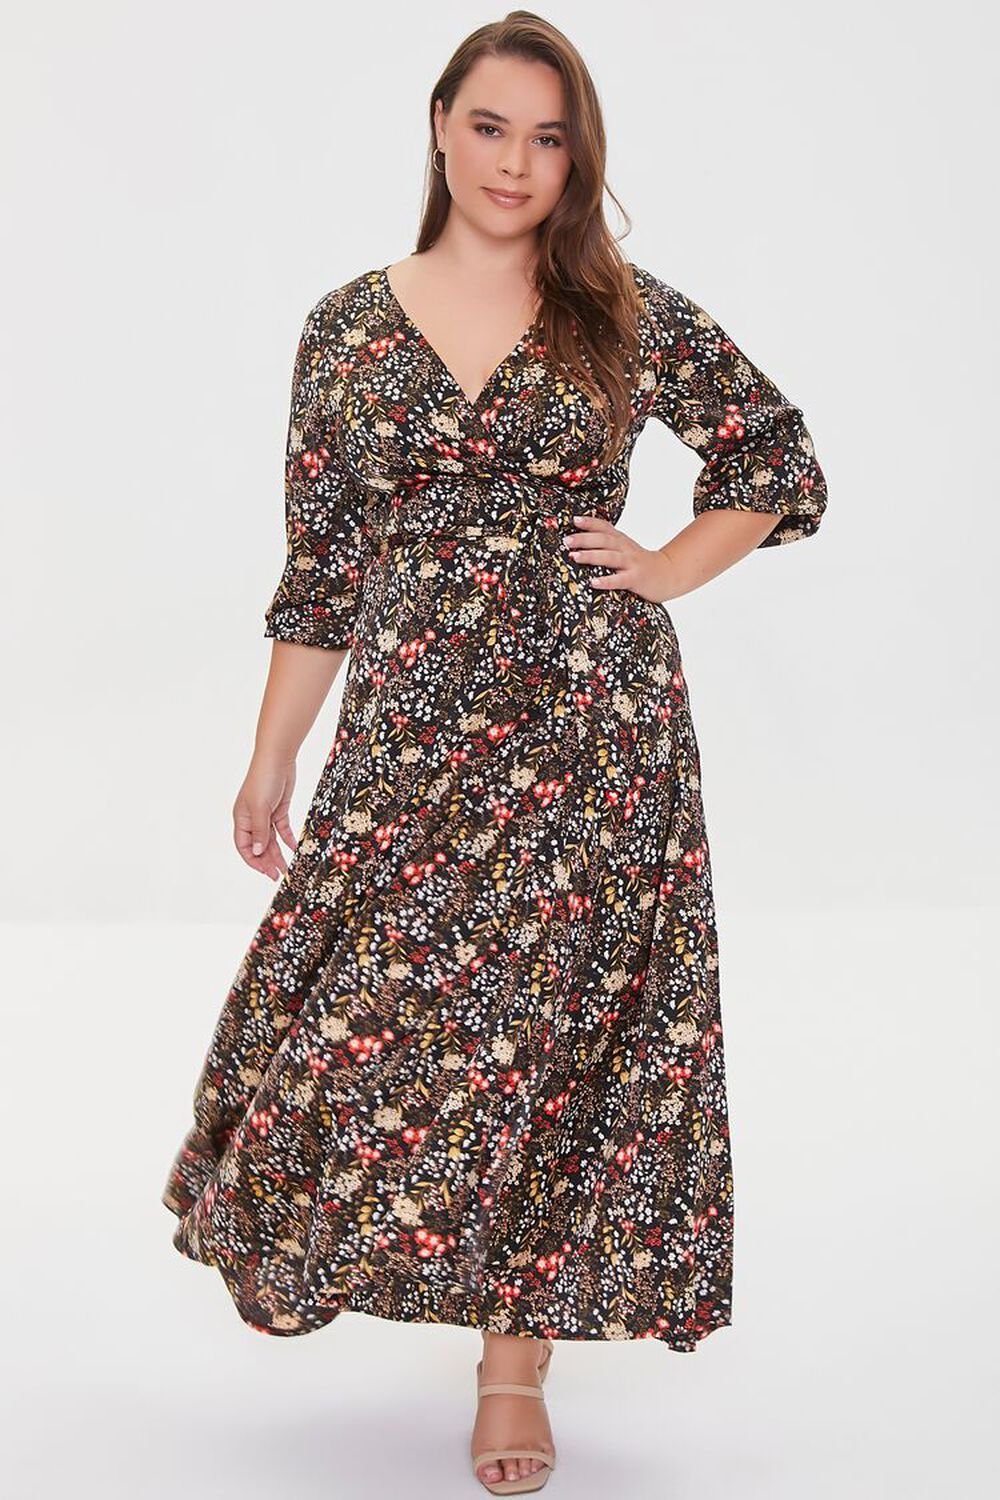 BLACK/MULTI Plus Size Floral Print Maxi Dress, image 1